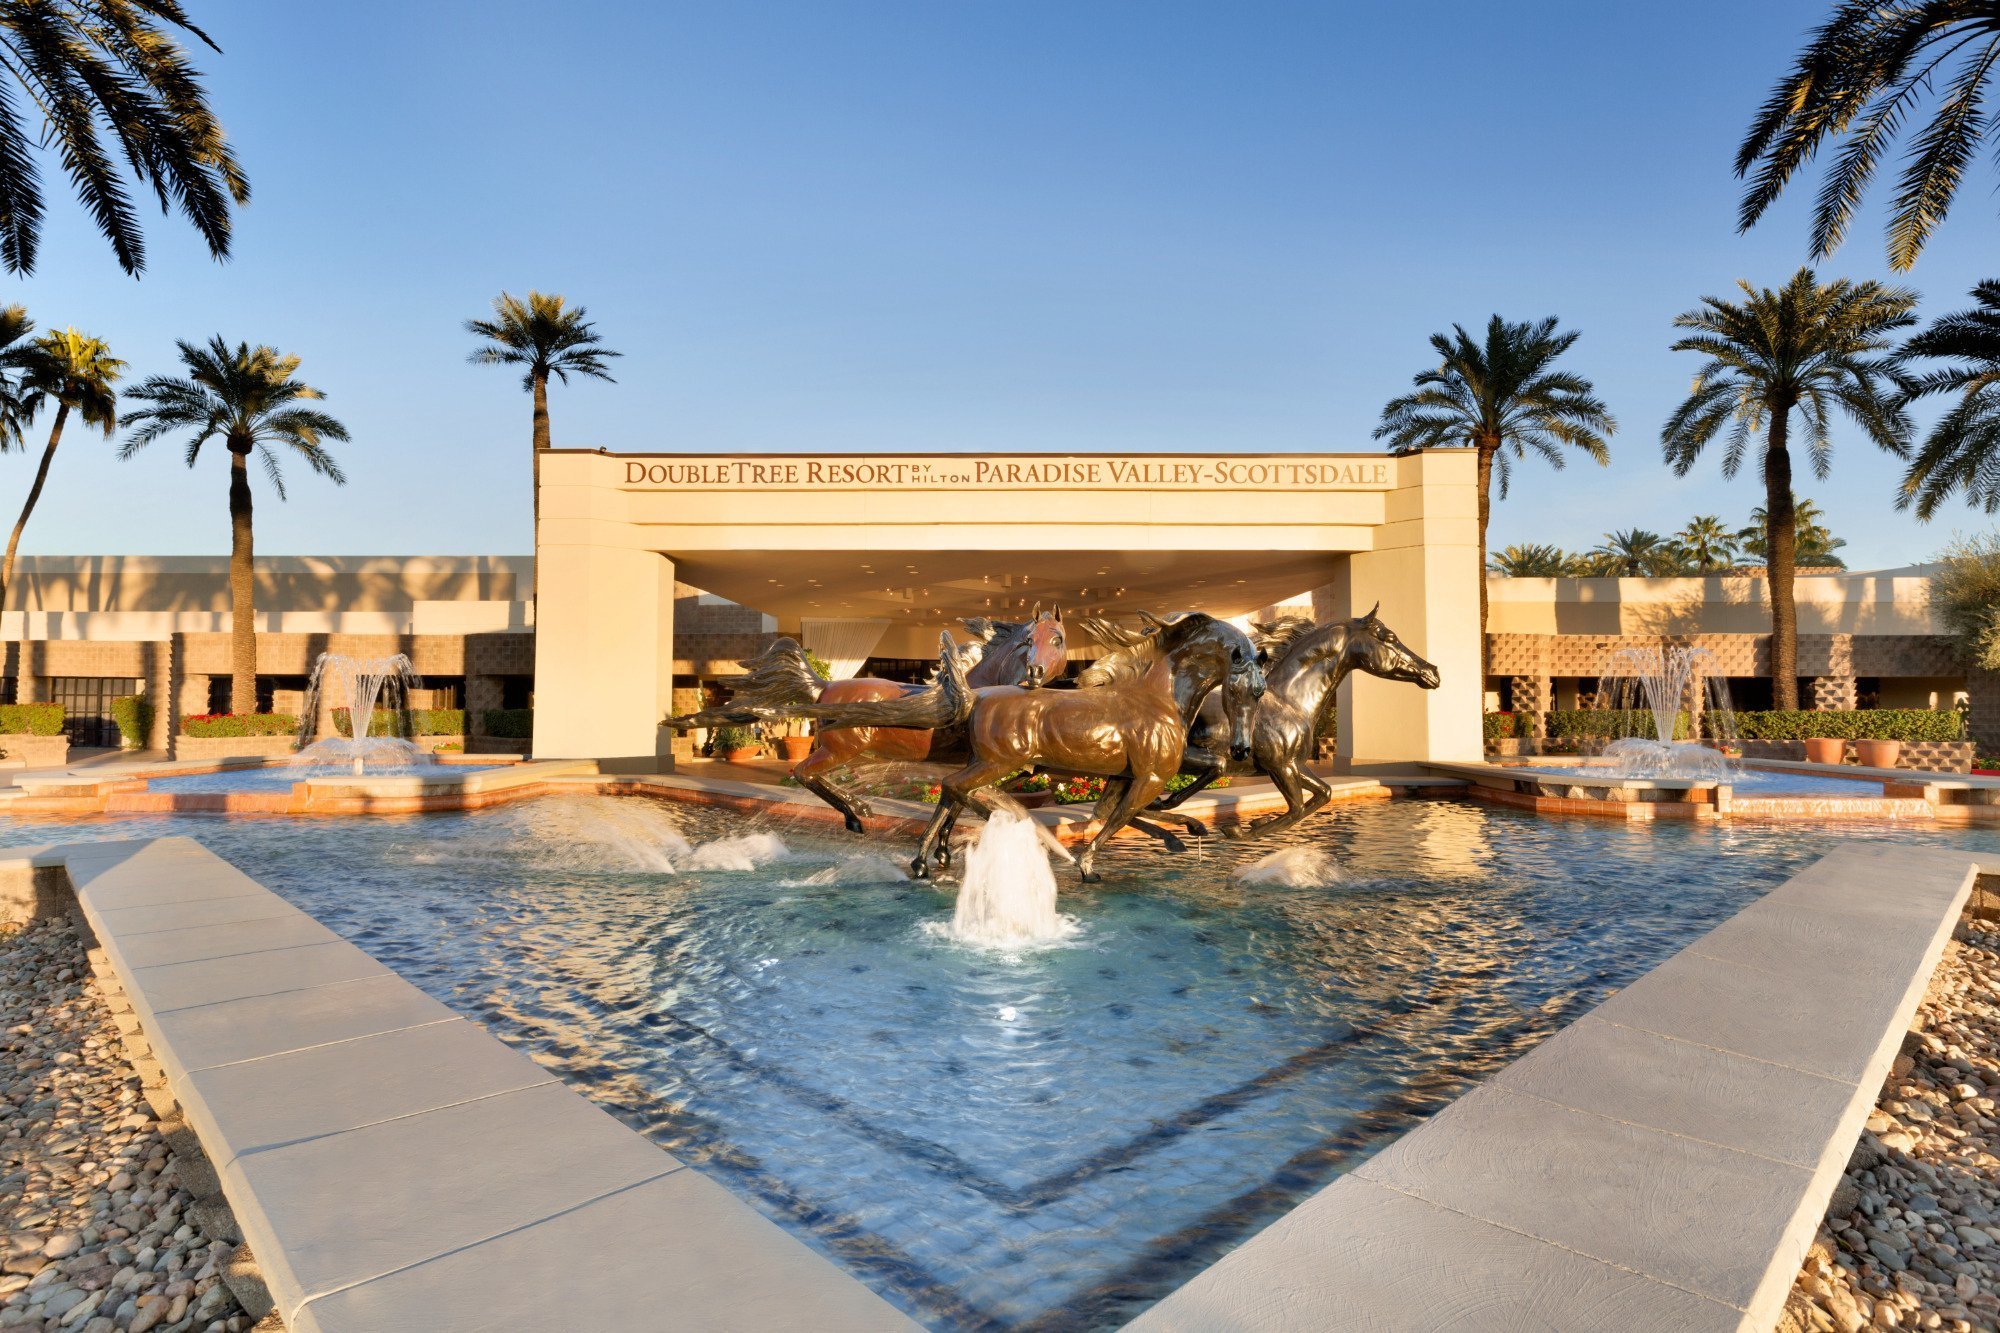 Photo of Doubletree Resort by Hilton Hotel Paradise Valley - Scottsdale, Scottsdale, AZ